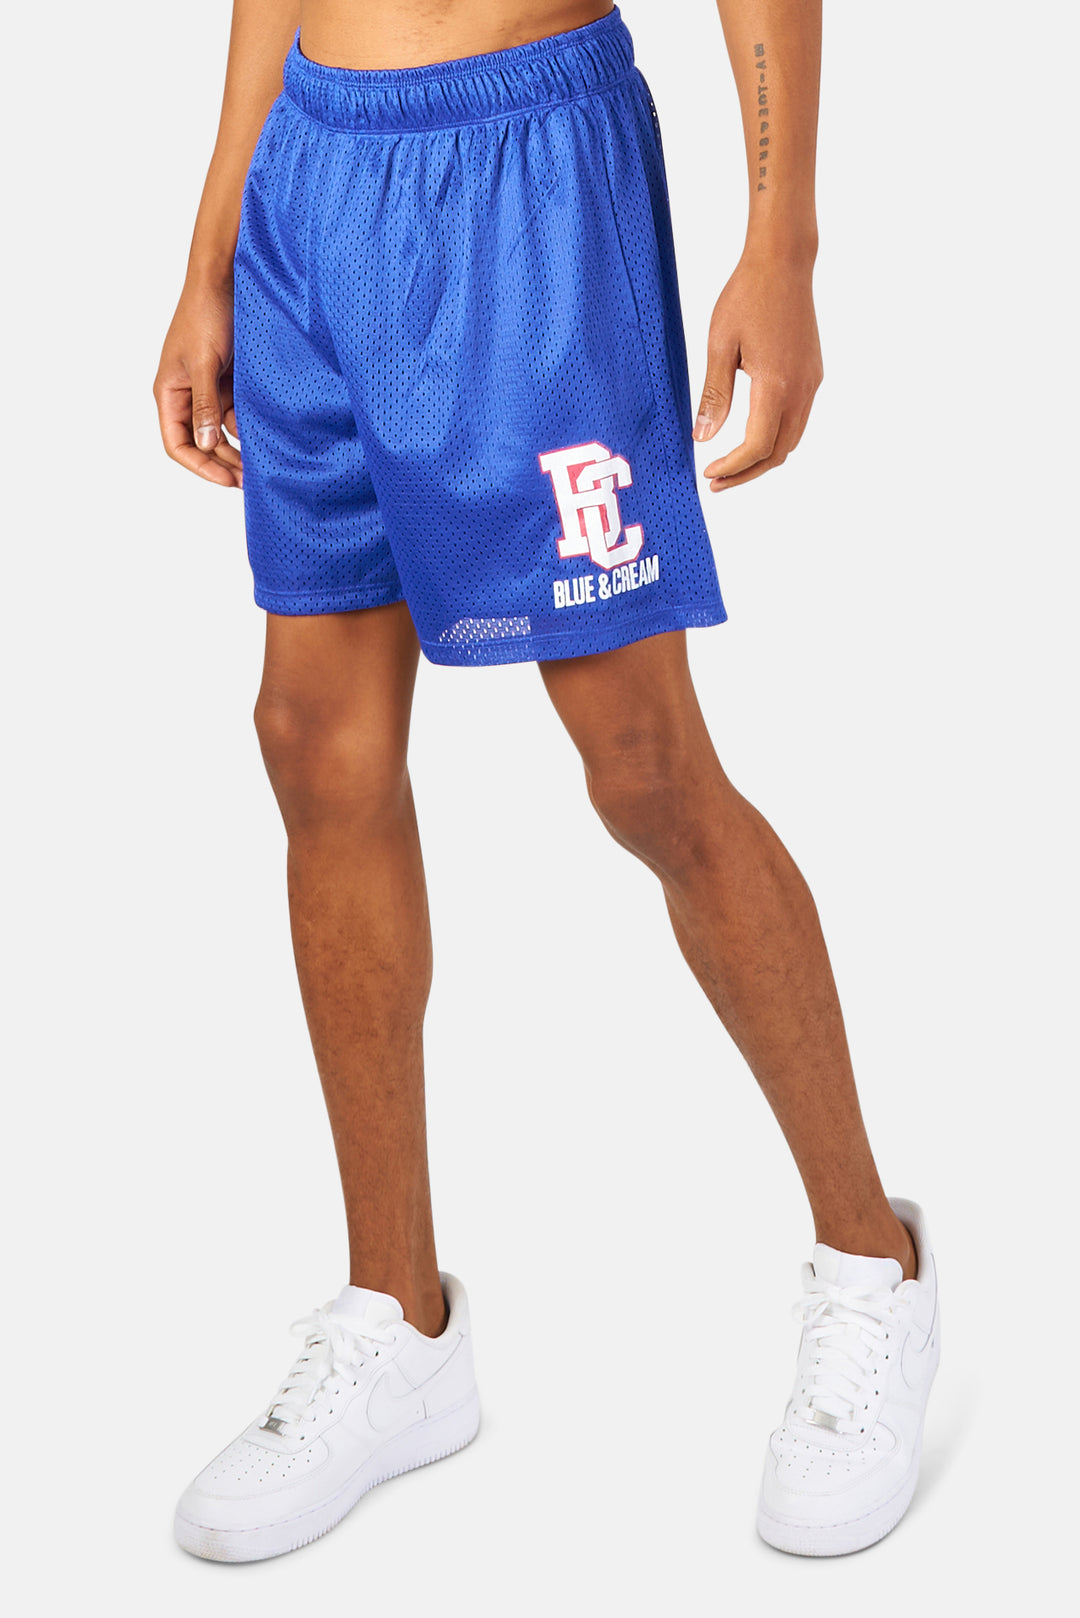 New York Mesh Shorts Royal Blue/Red - blueandcream